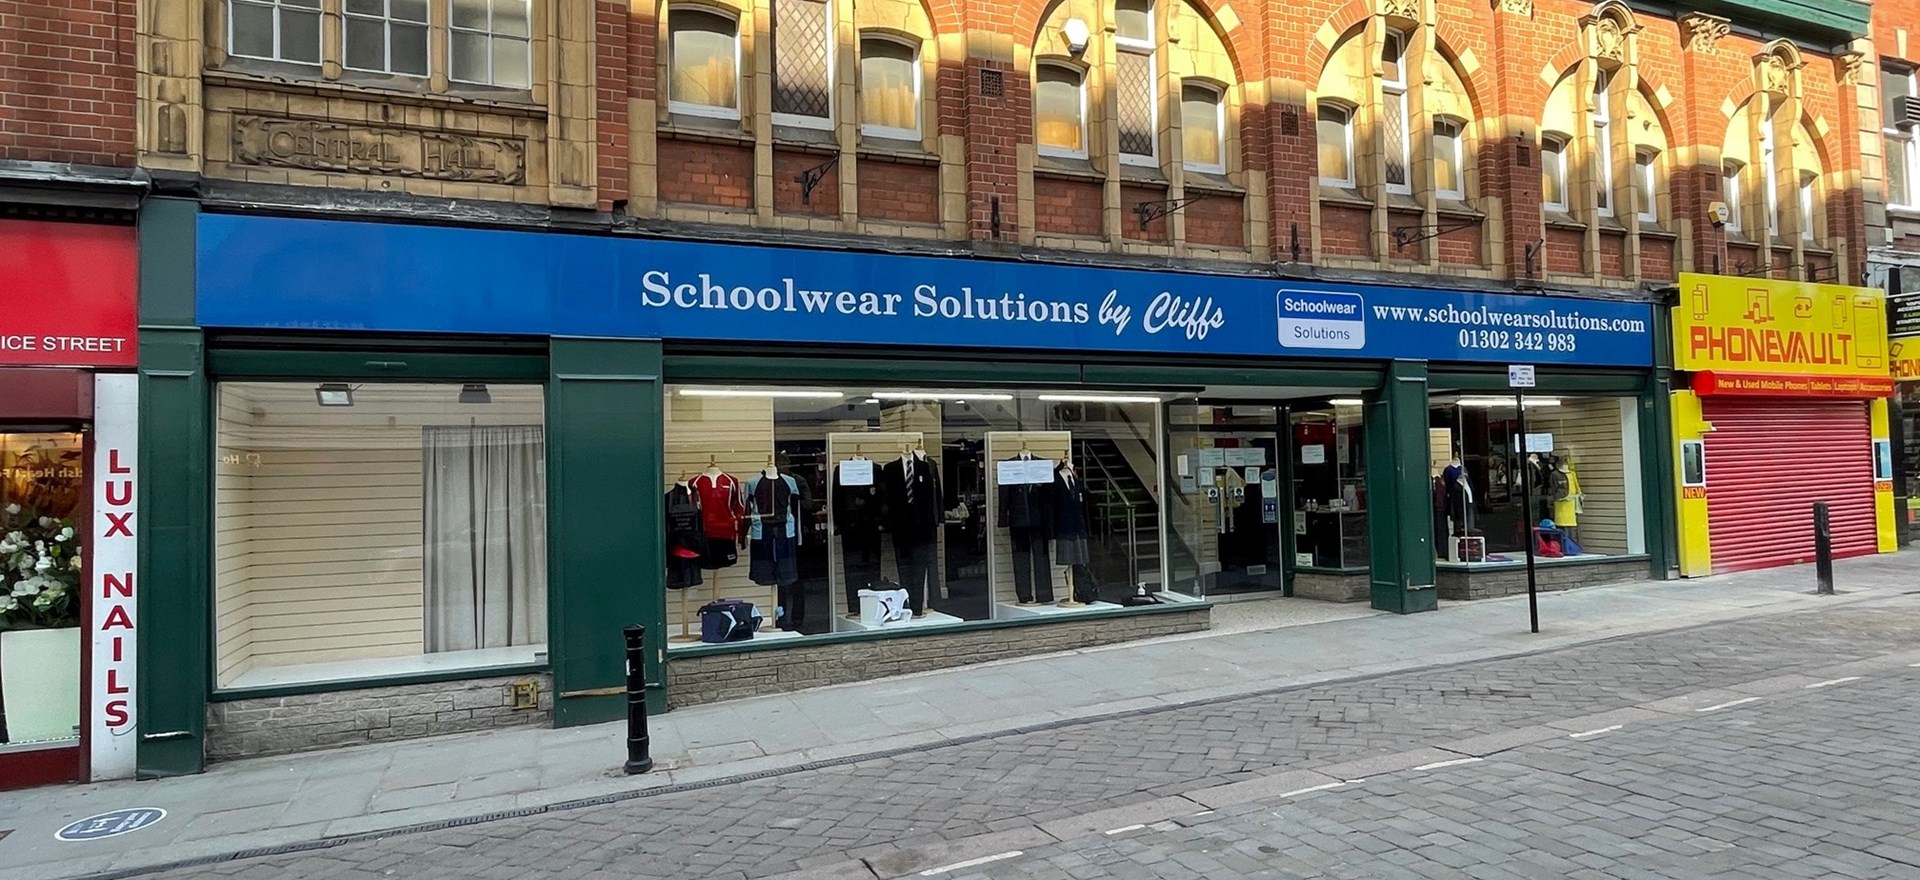 Schoolwear Solutions